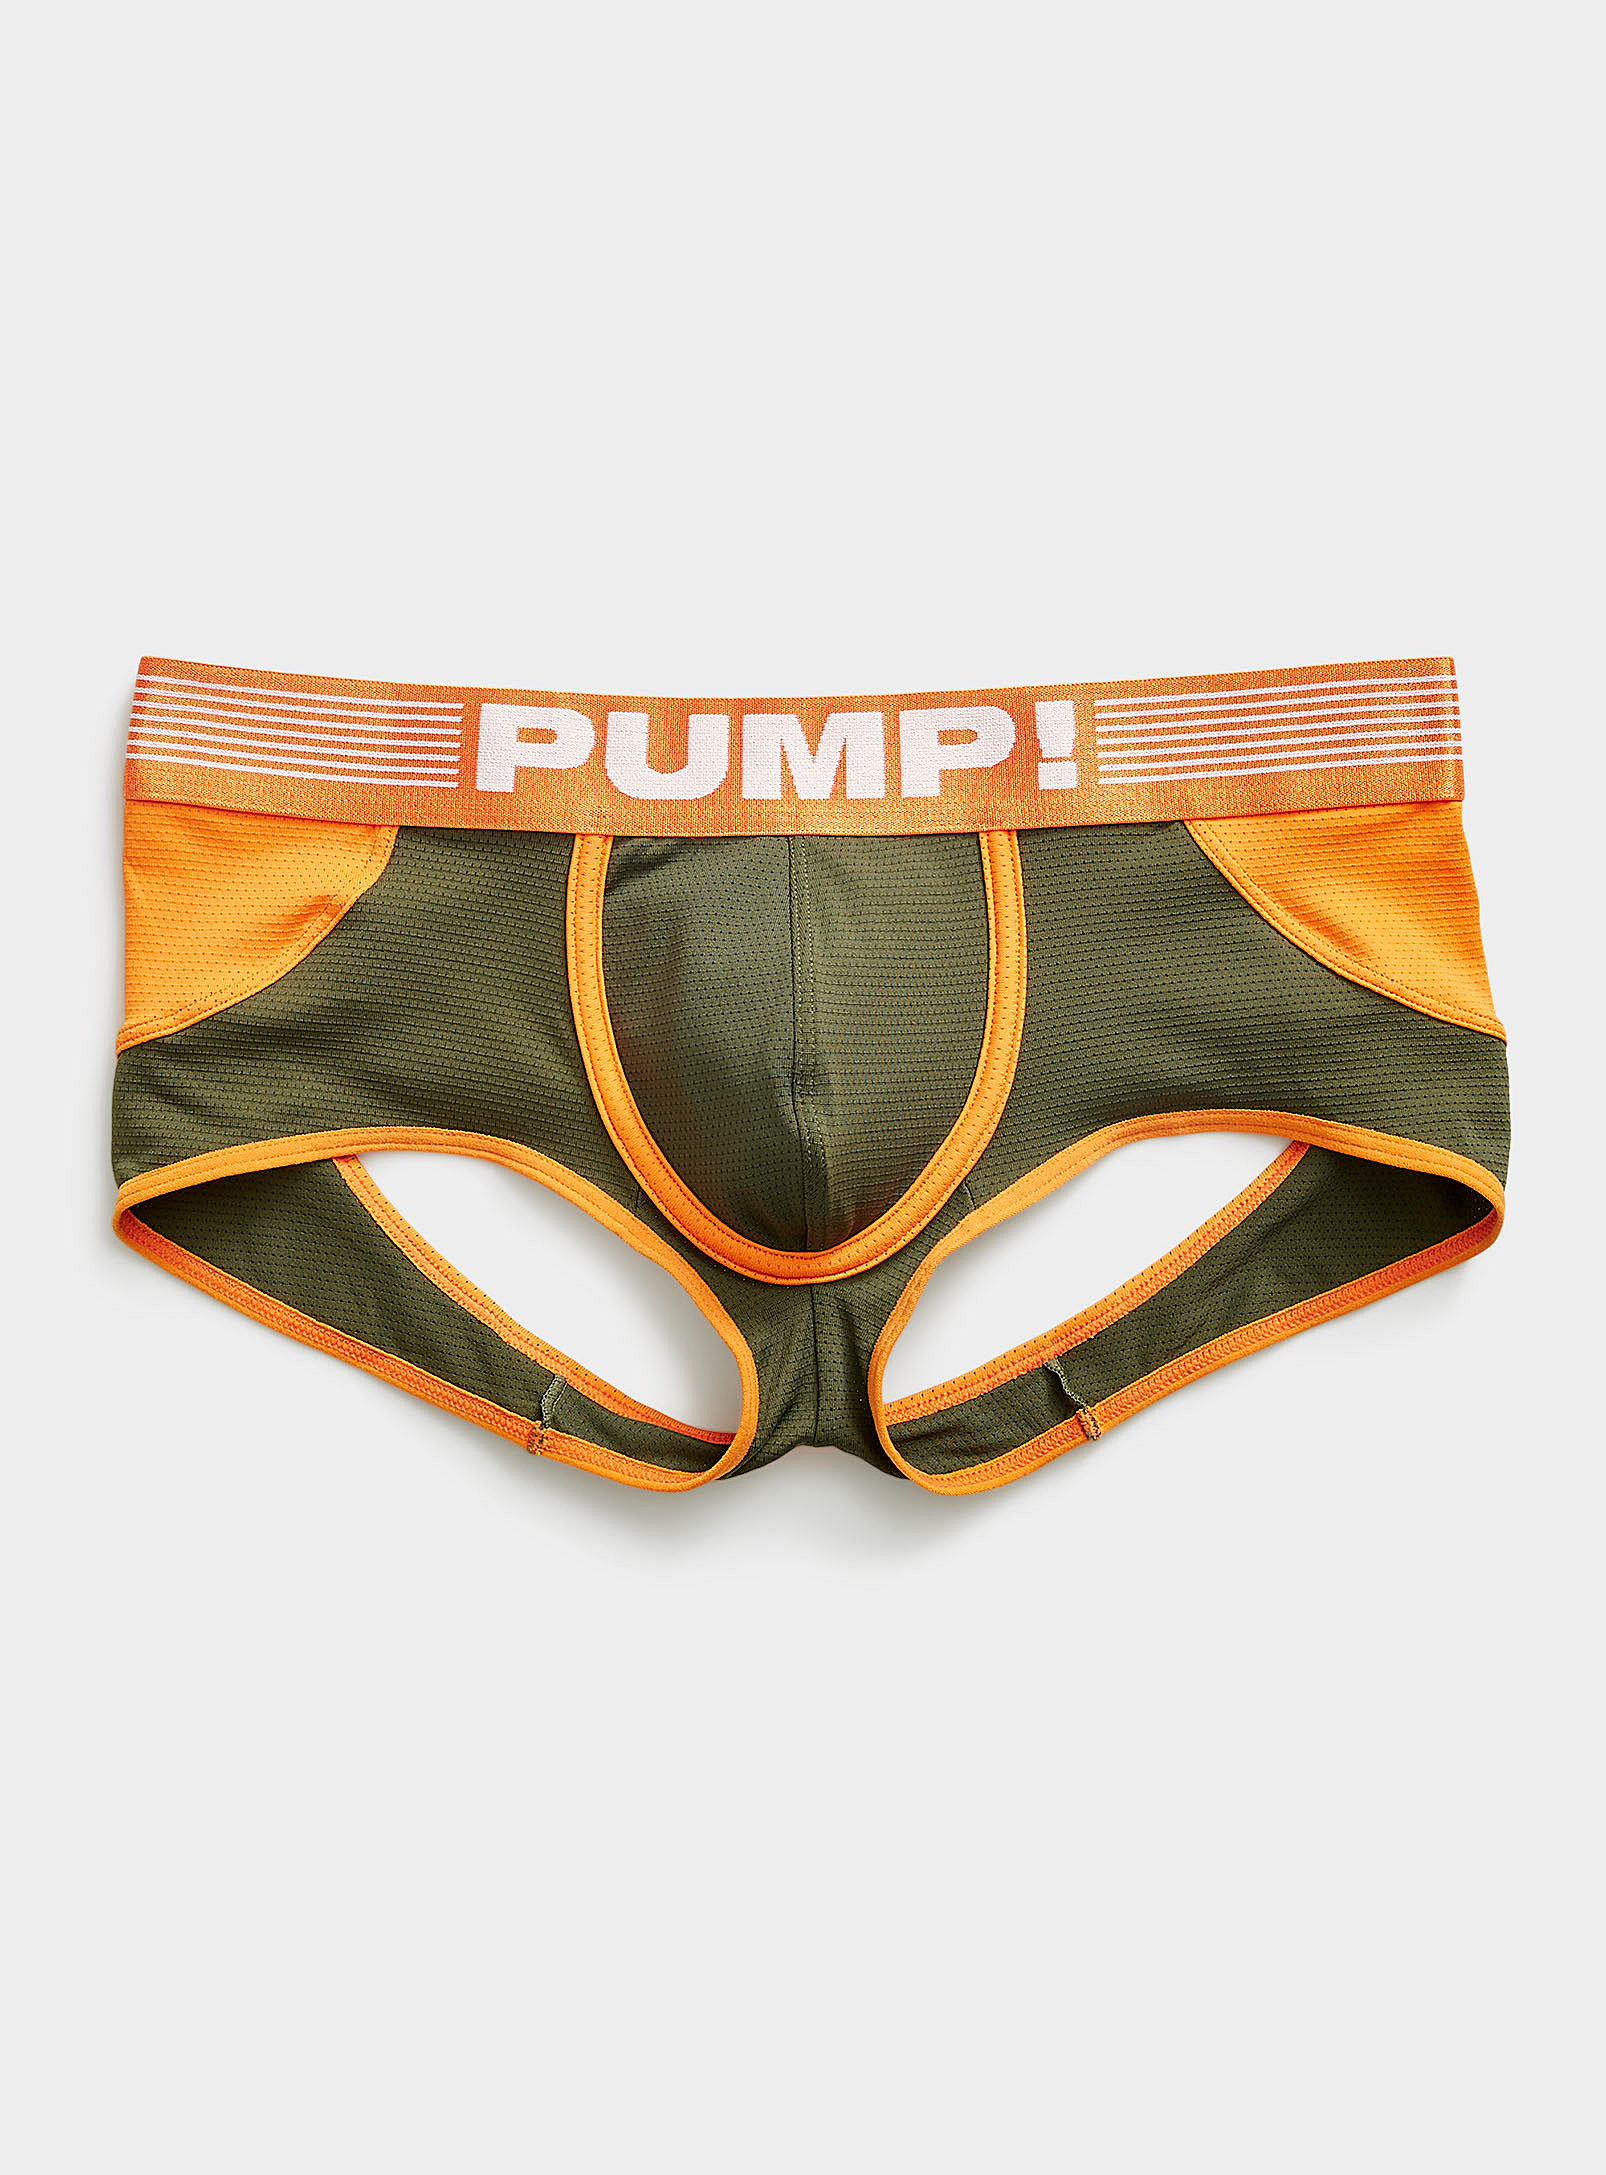 Pump! - Men's Squad orange-and-green trunk